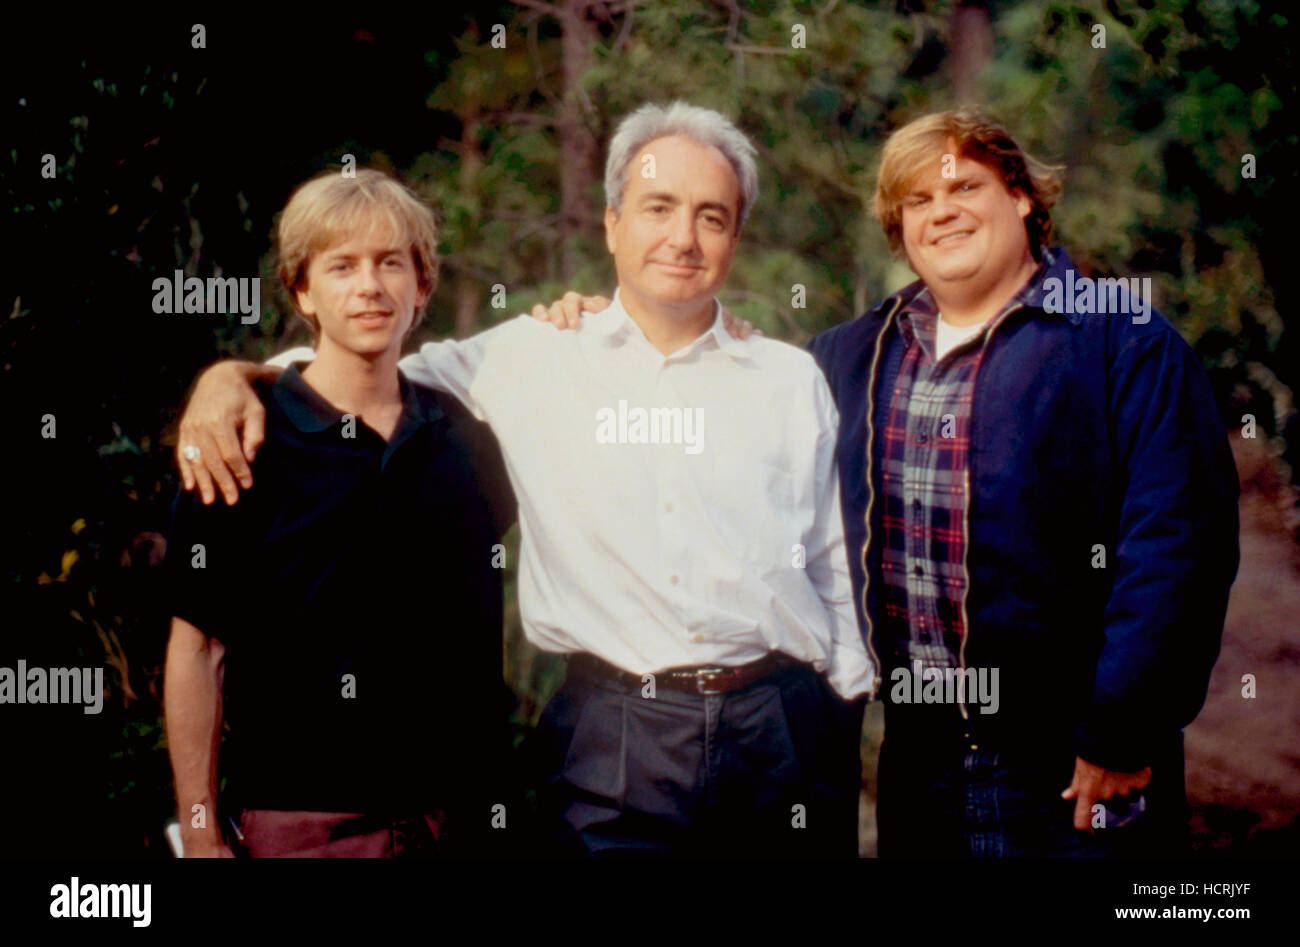 BLACK SHEEP, David Spade, Lorne Michaels, Chris Farley, 1996, (c)Paramount/courtesy Everett Collection Stock Photo